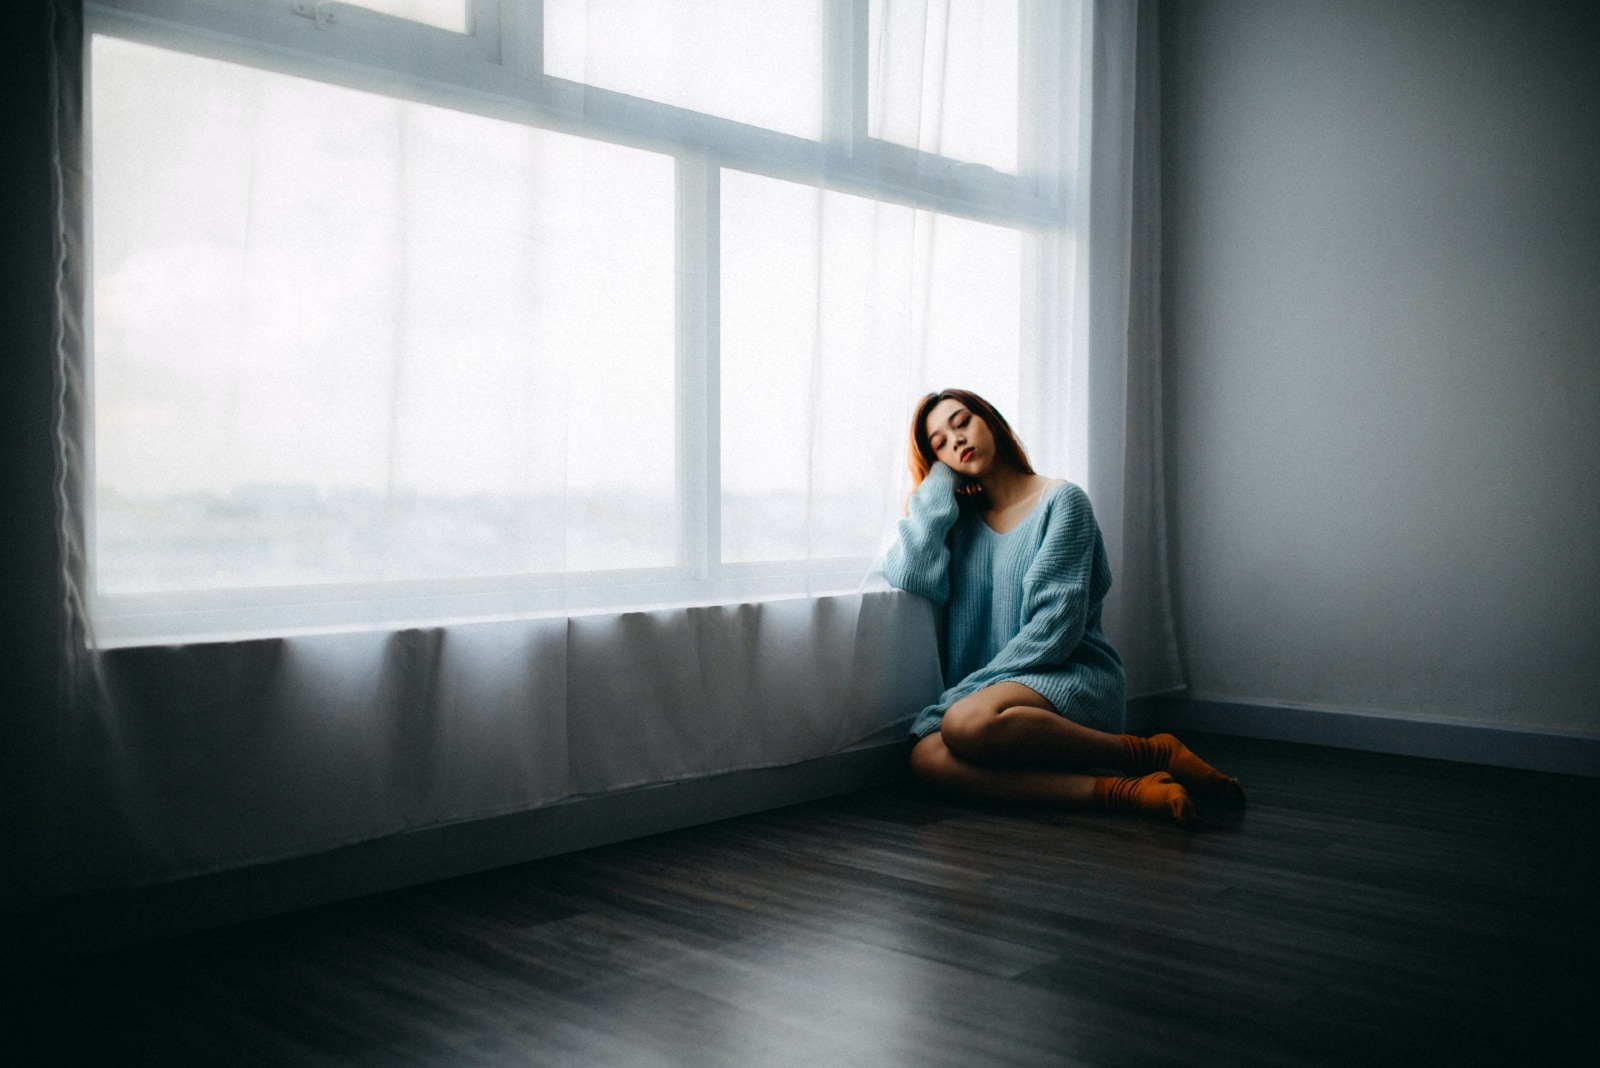 sad woman in blue sweater sitting on floor near window